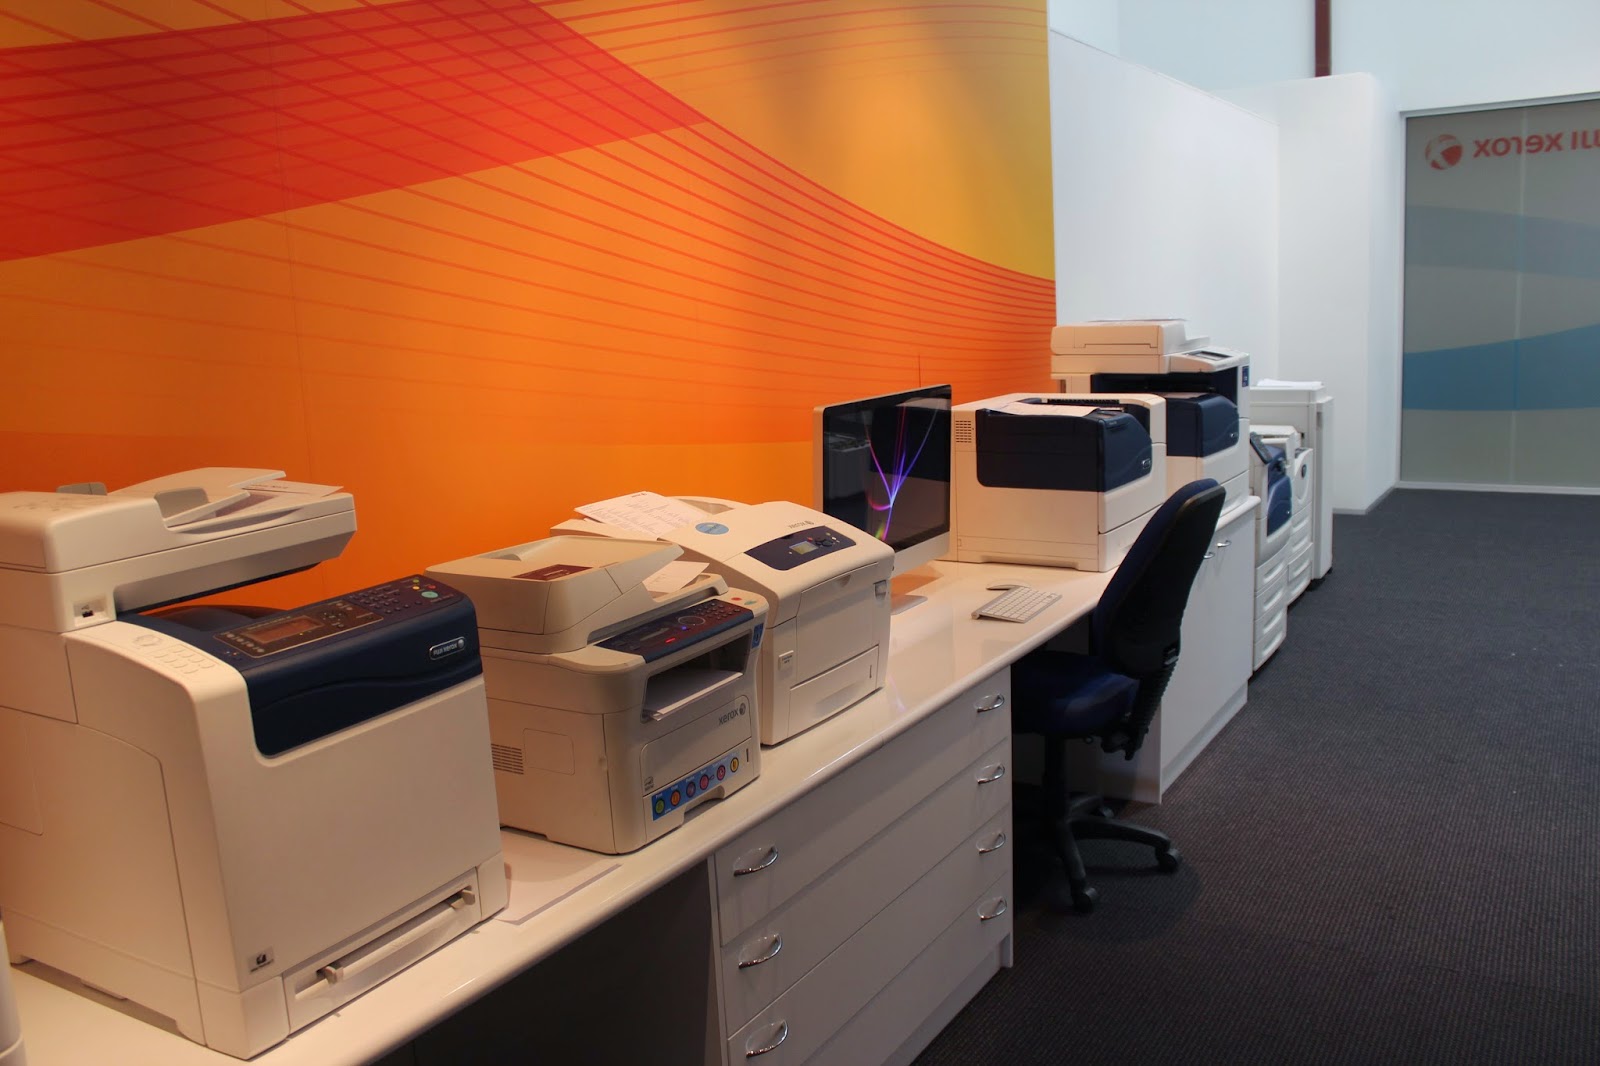 Fuji Xerox Printer Service Sydney